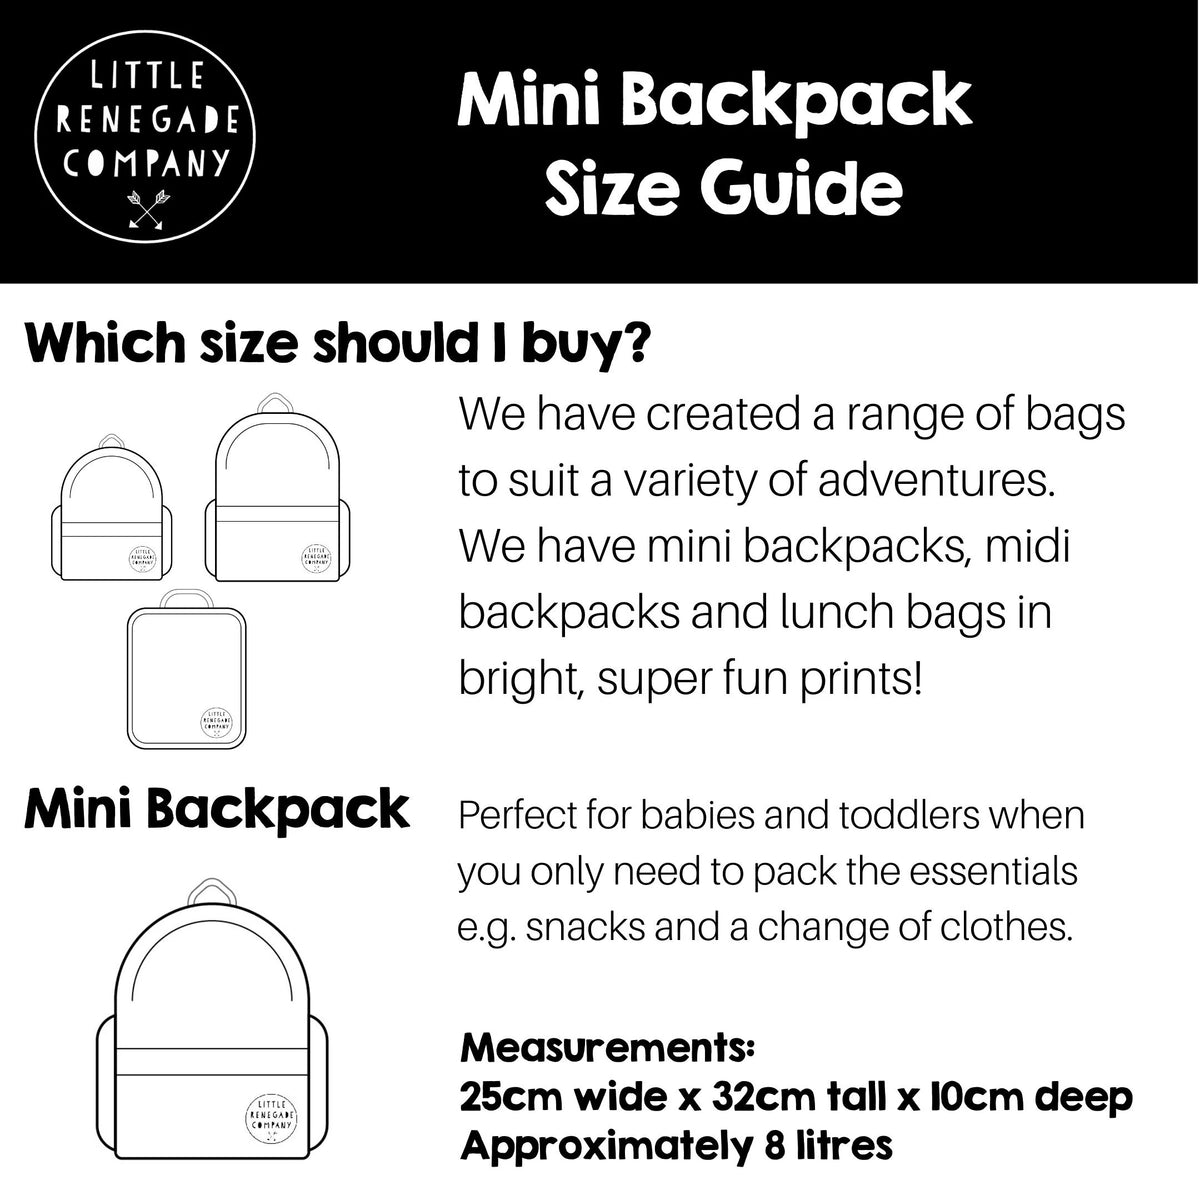 Little Renegade Company - Arizona Backpack | MINI